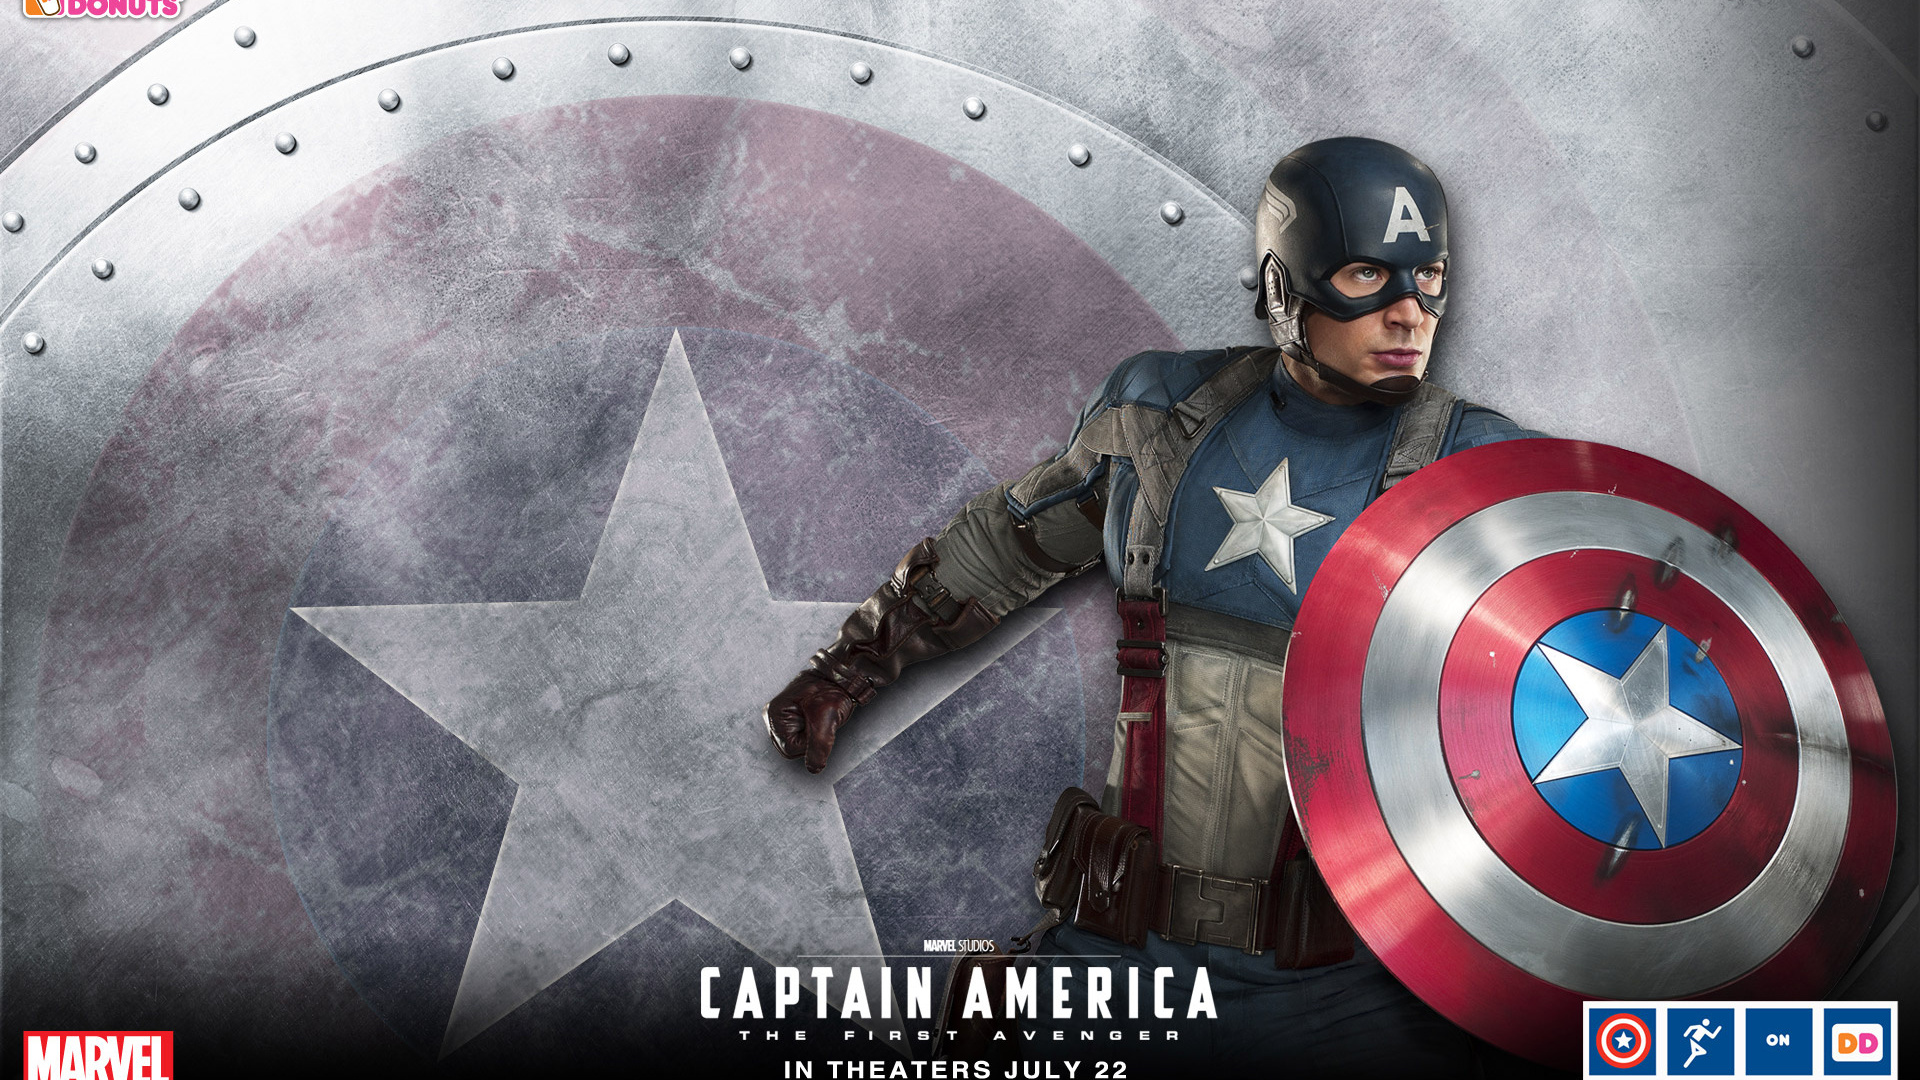 Captain America Wallpaper HD movie superhero 4 Celebrity and